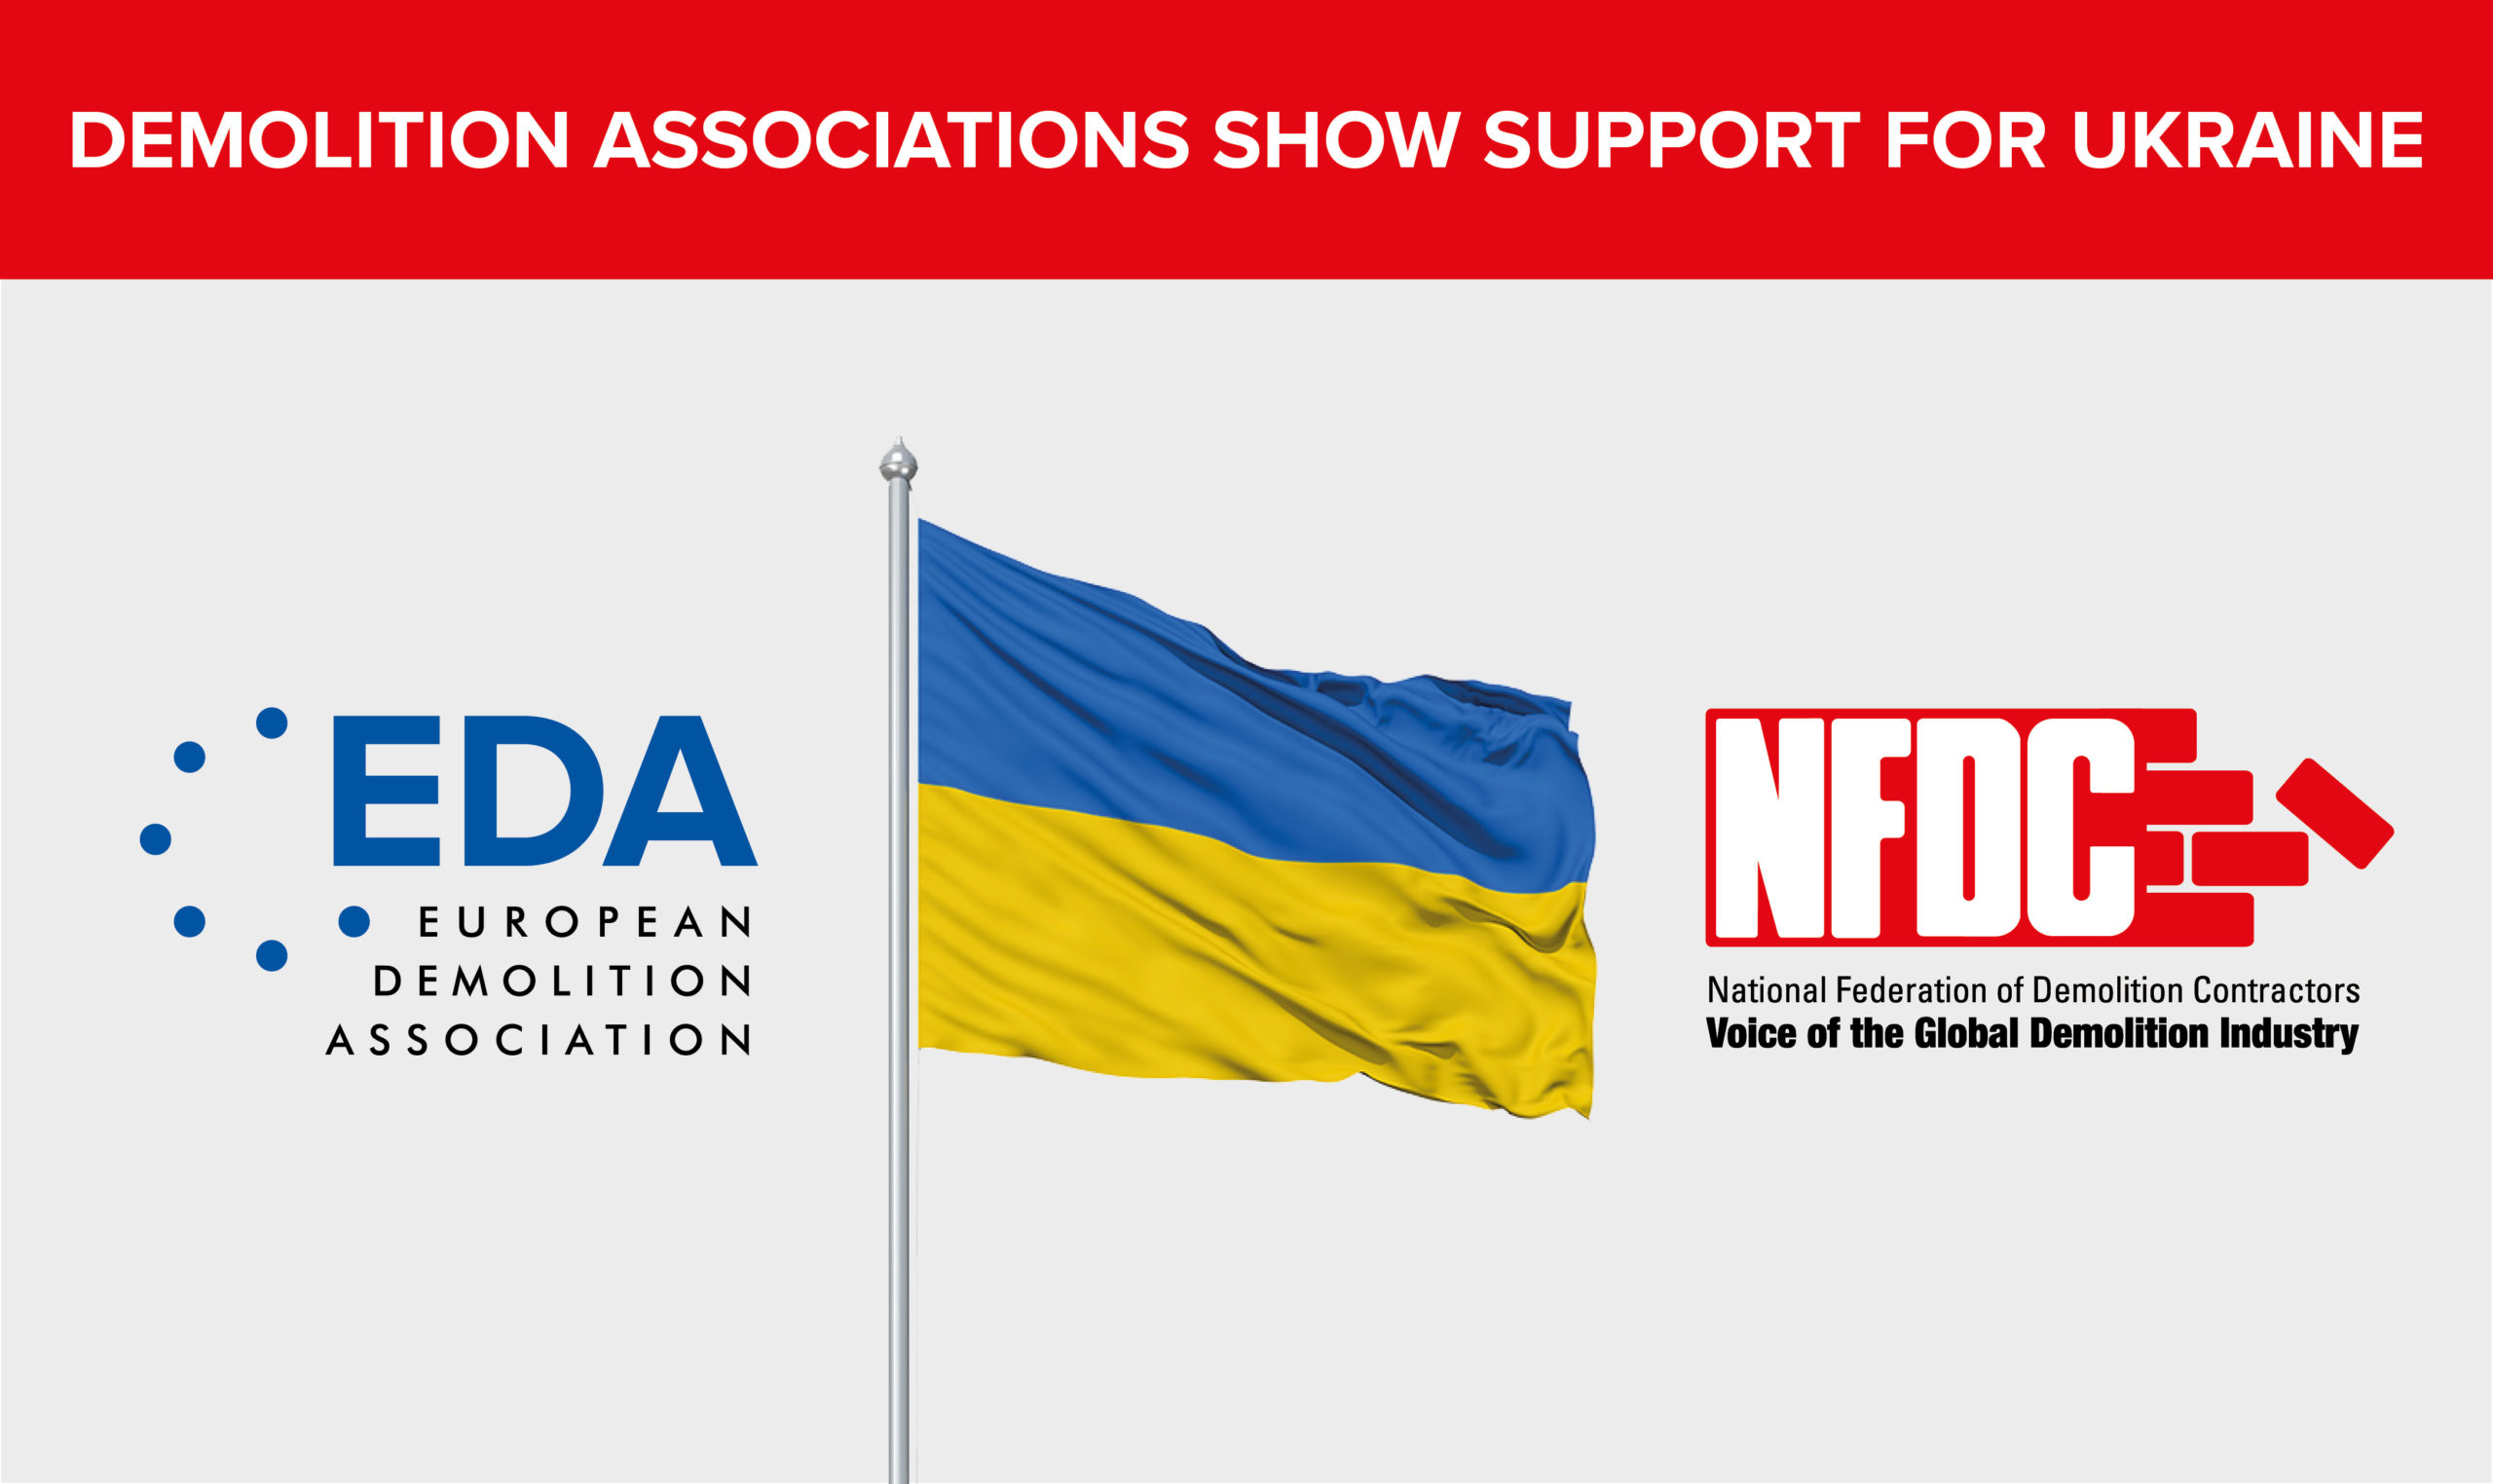 Demolition Associations share messages of support for Ukraine